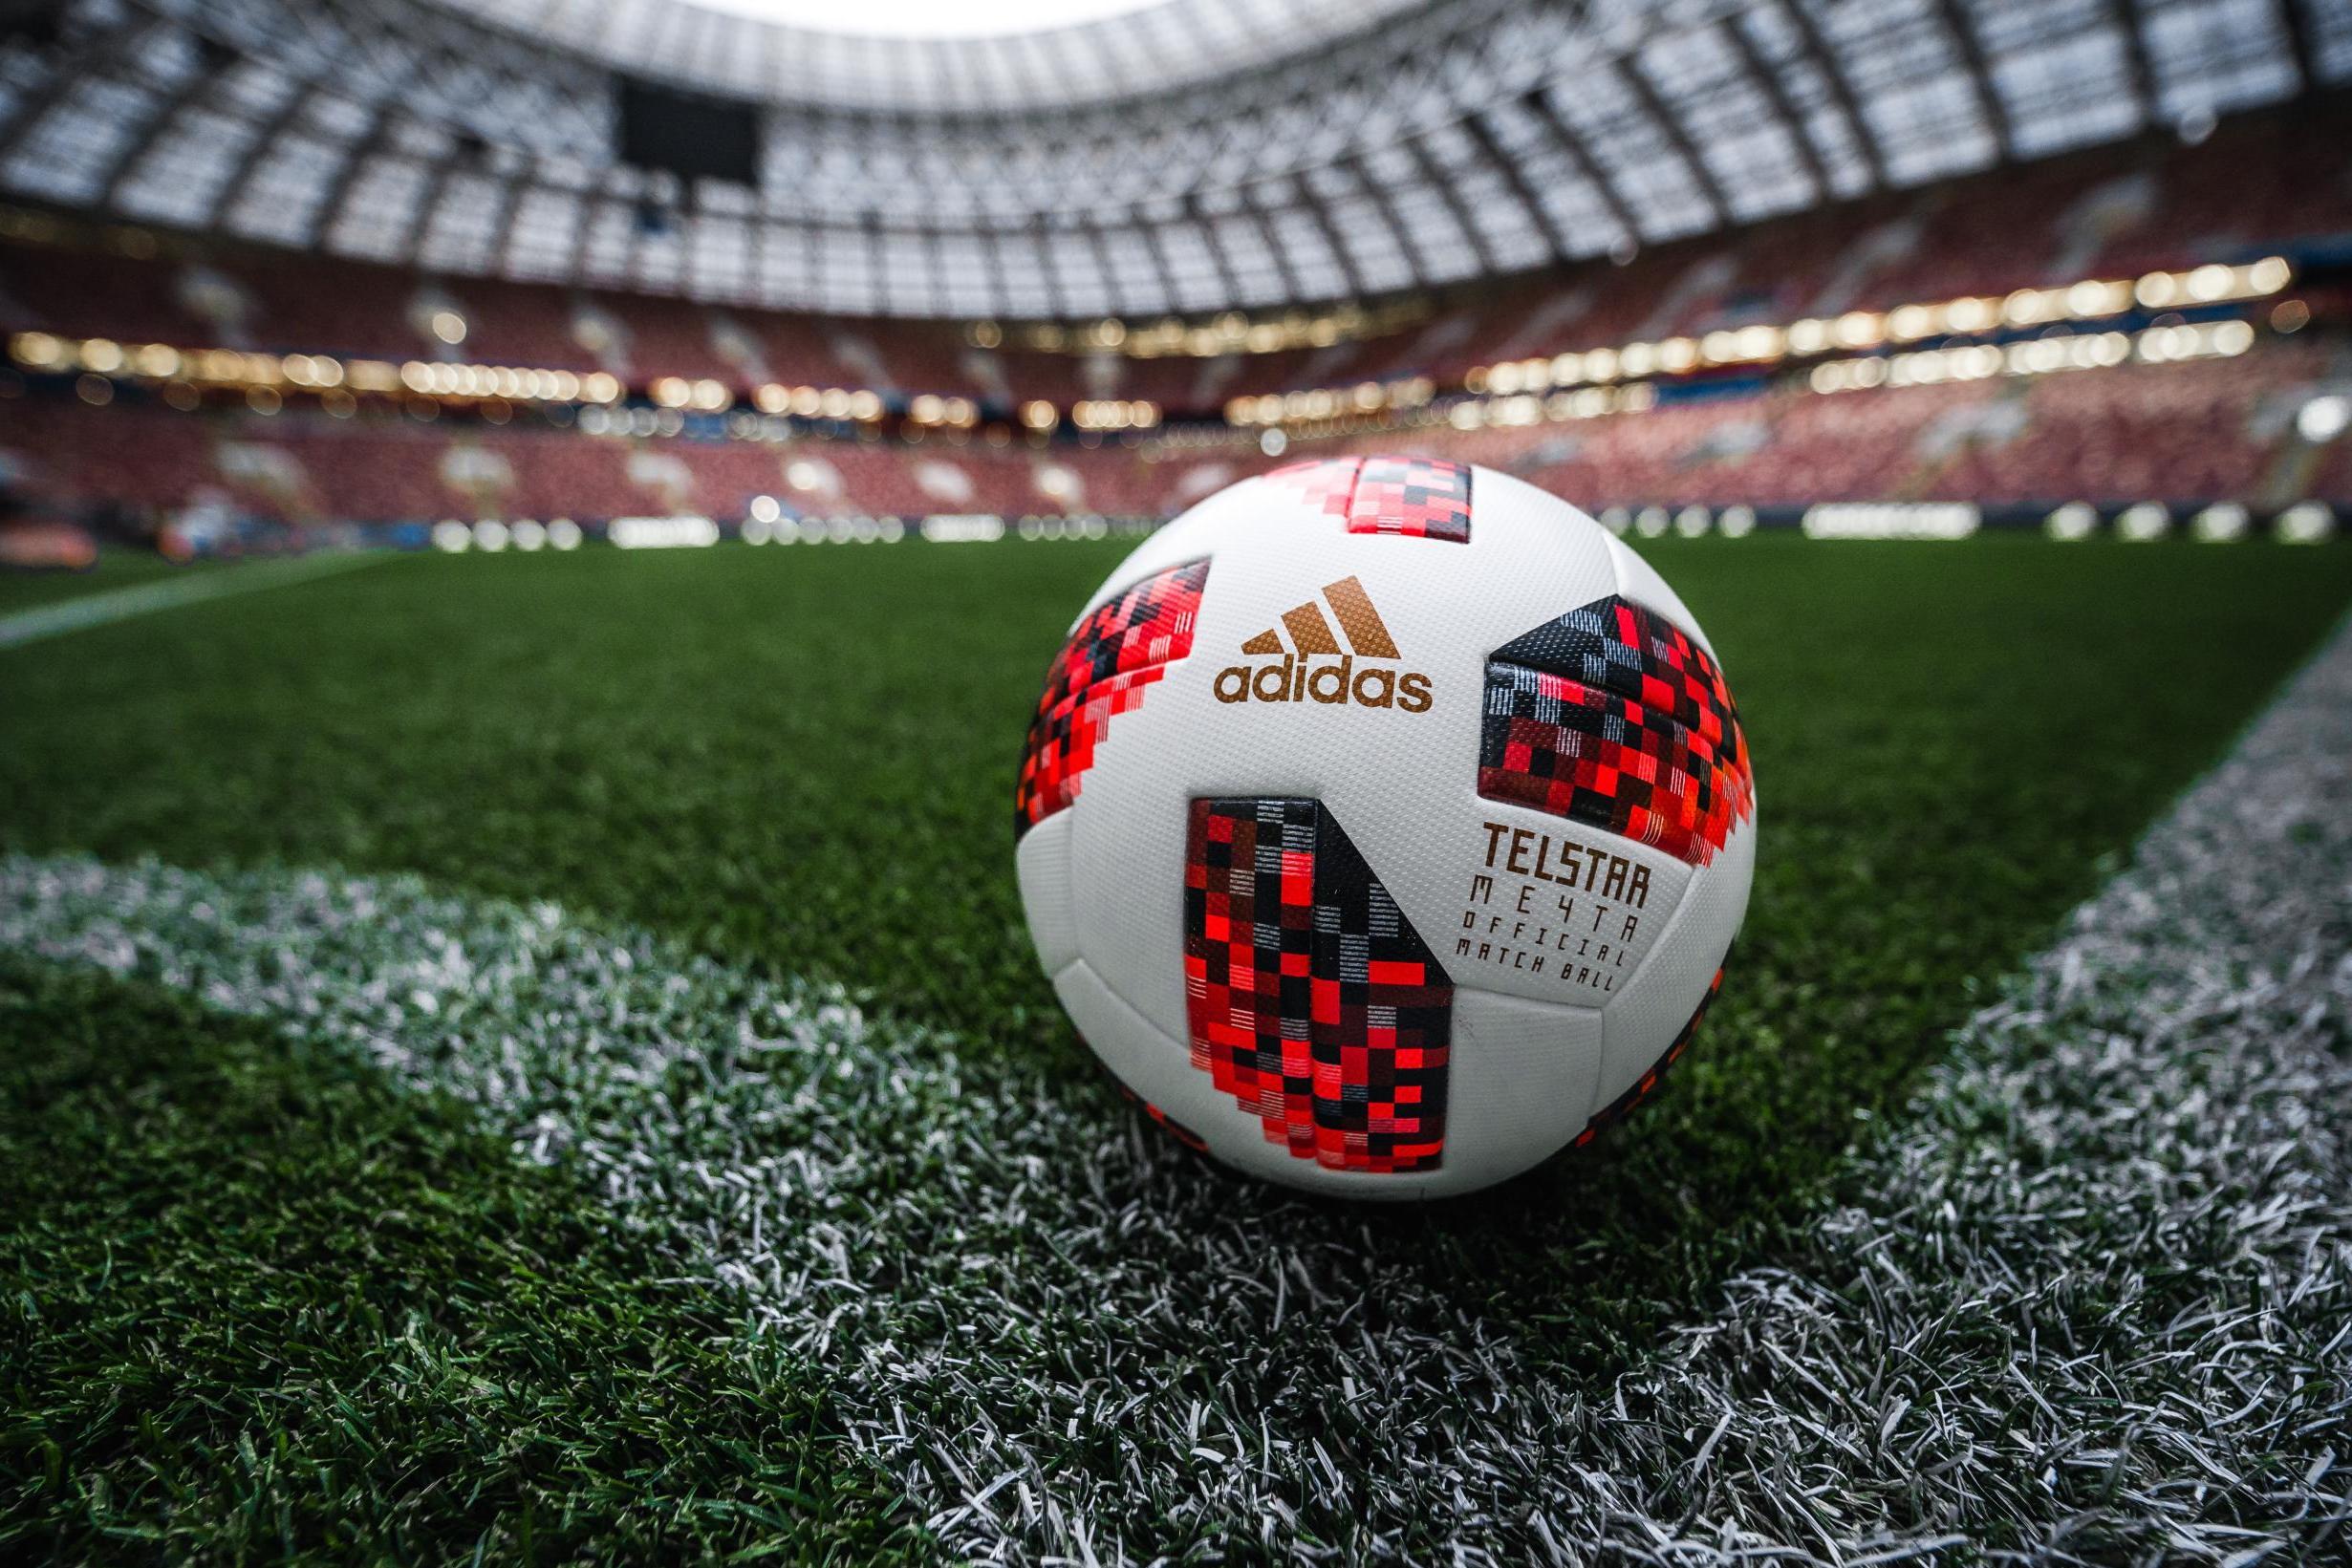 fifa world cup wallpaper,soccer ball,football,ball,sport venue,soccer